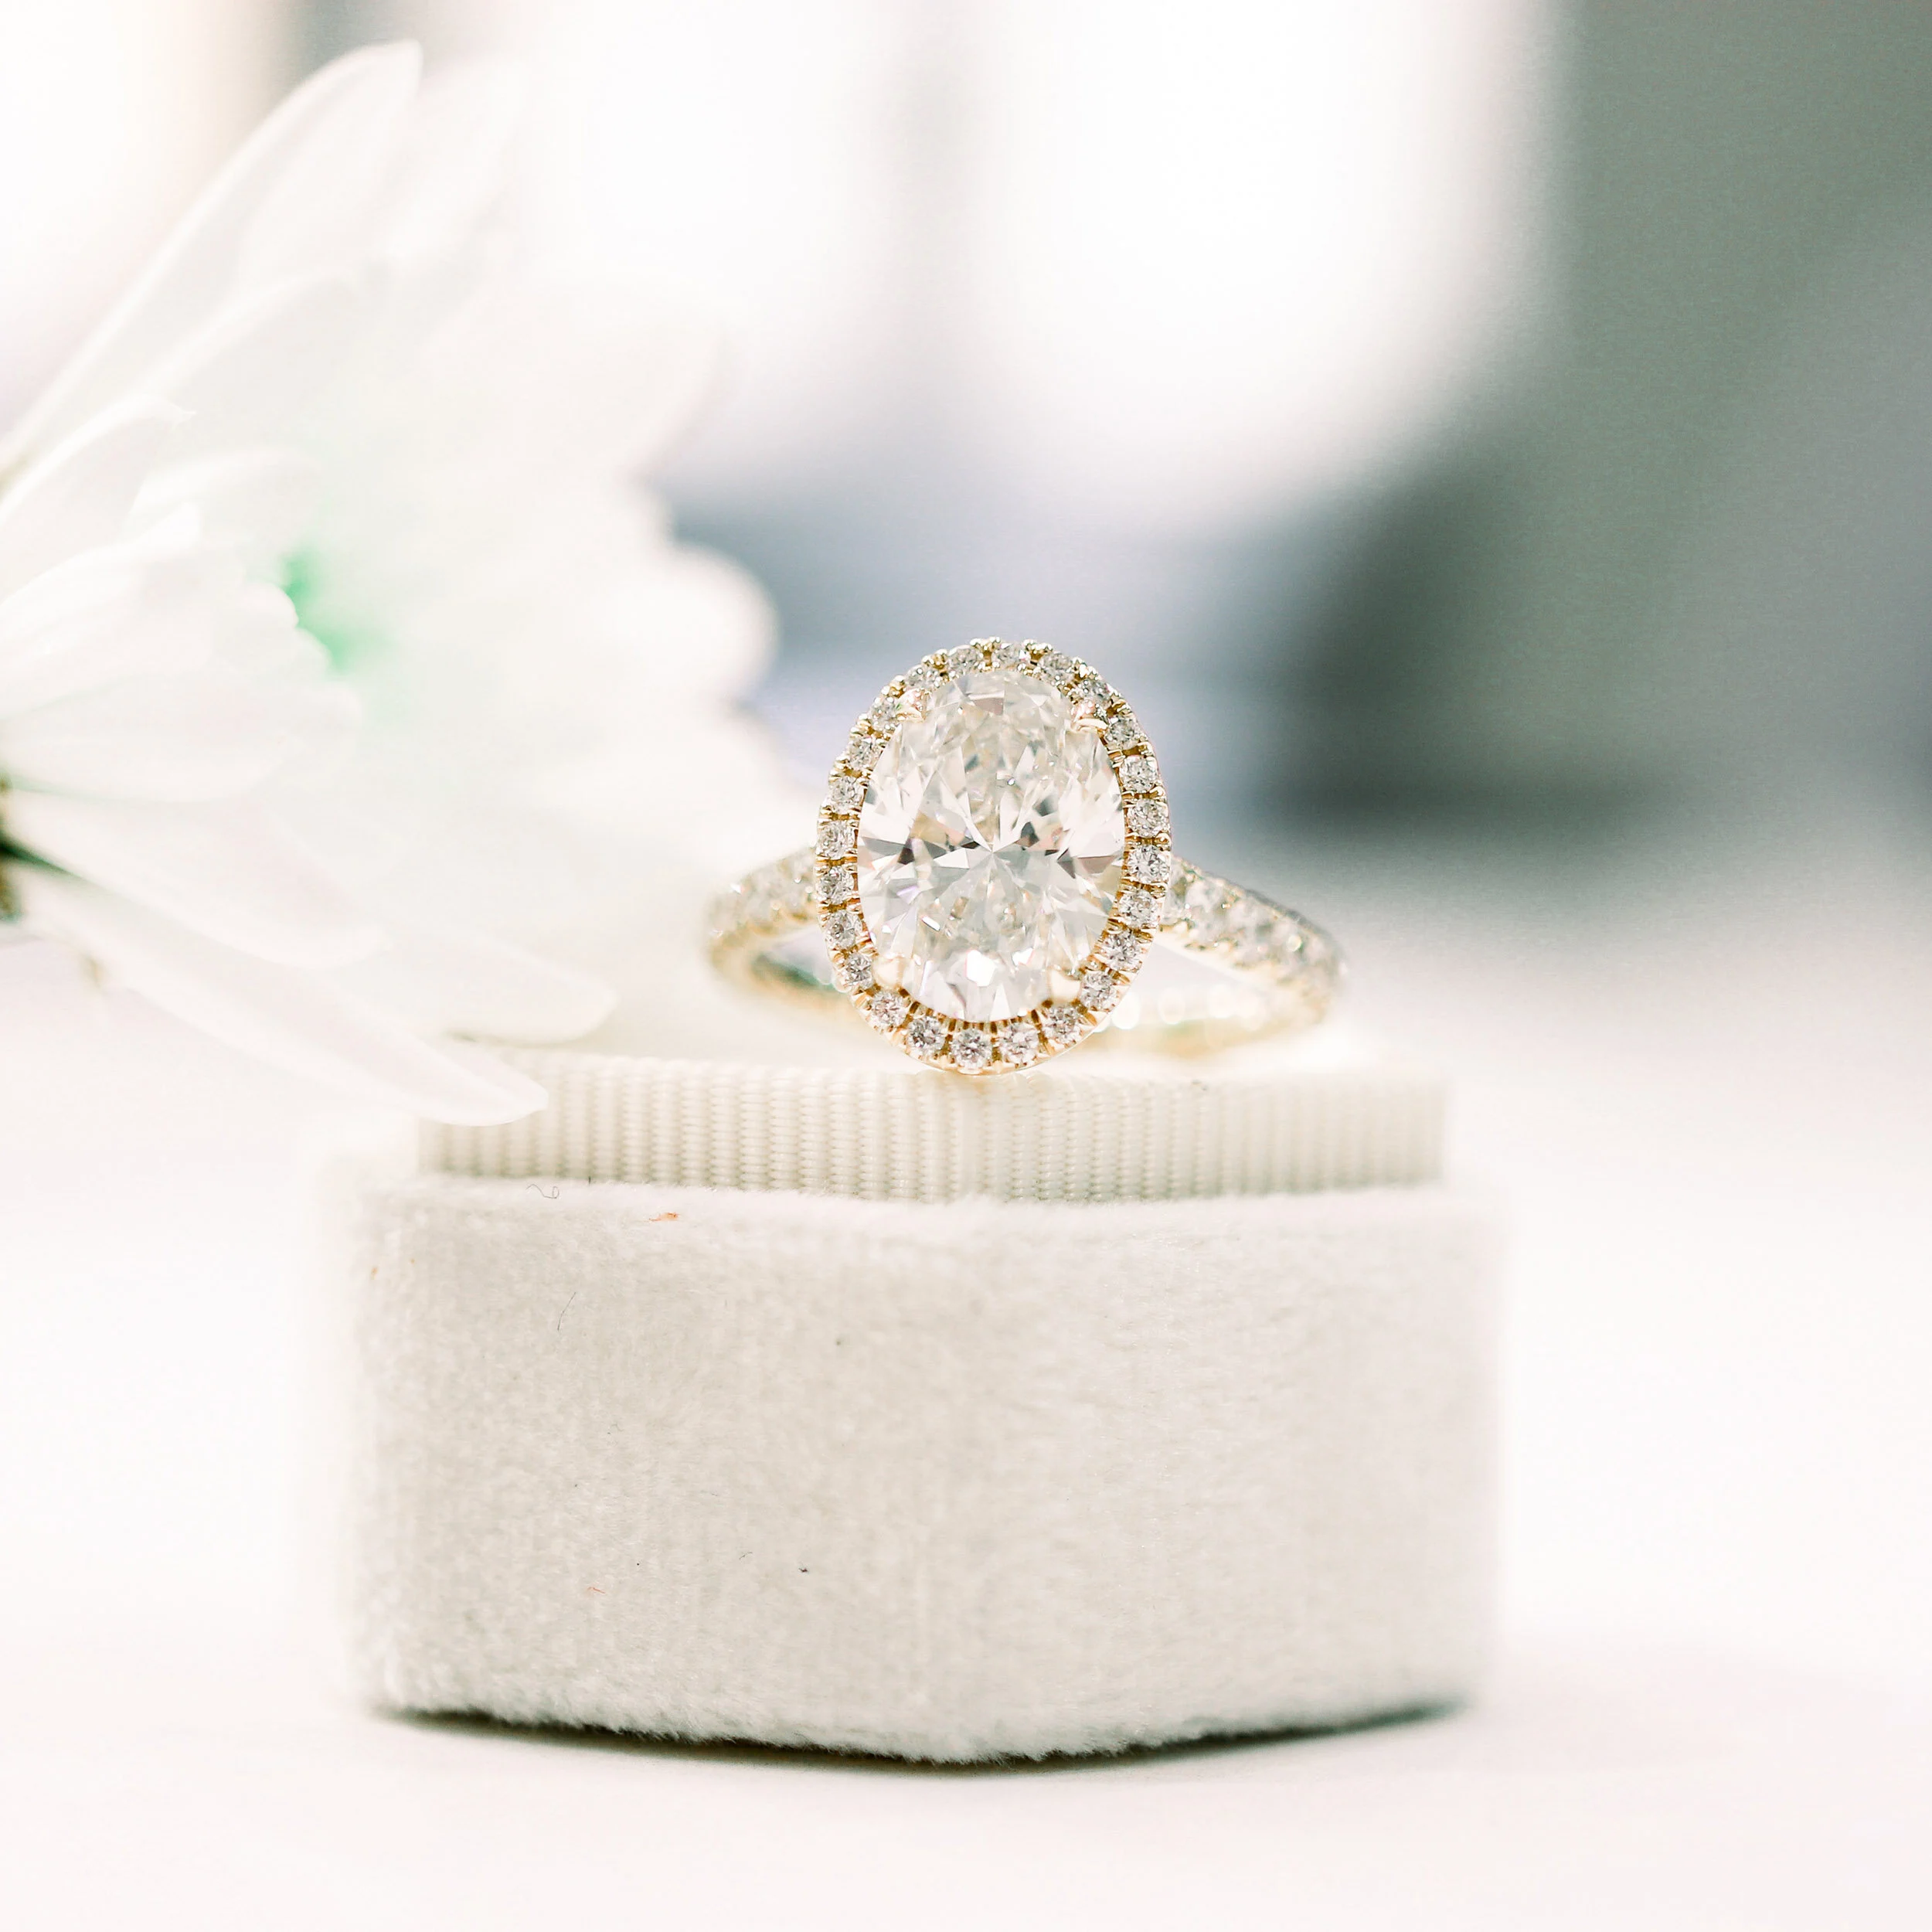 14k Yellow Gold 3.5 Carat Oval Halo Engagement Ring with Diamond Band and Bridge Featuring Lab Diamonds Ada Diamonds Design AD-156 Artistic